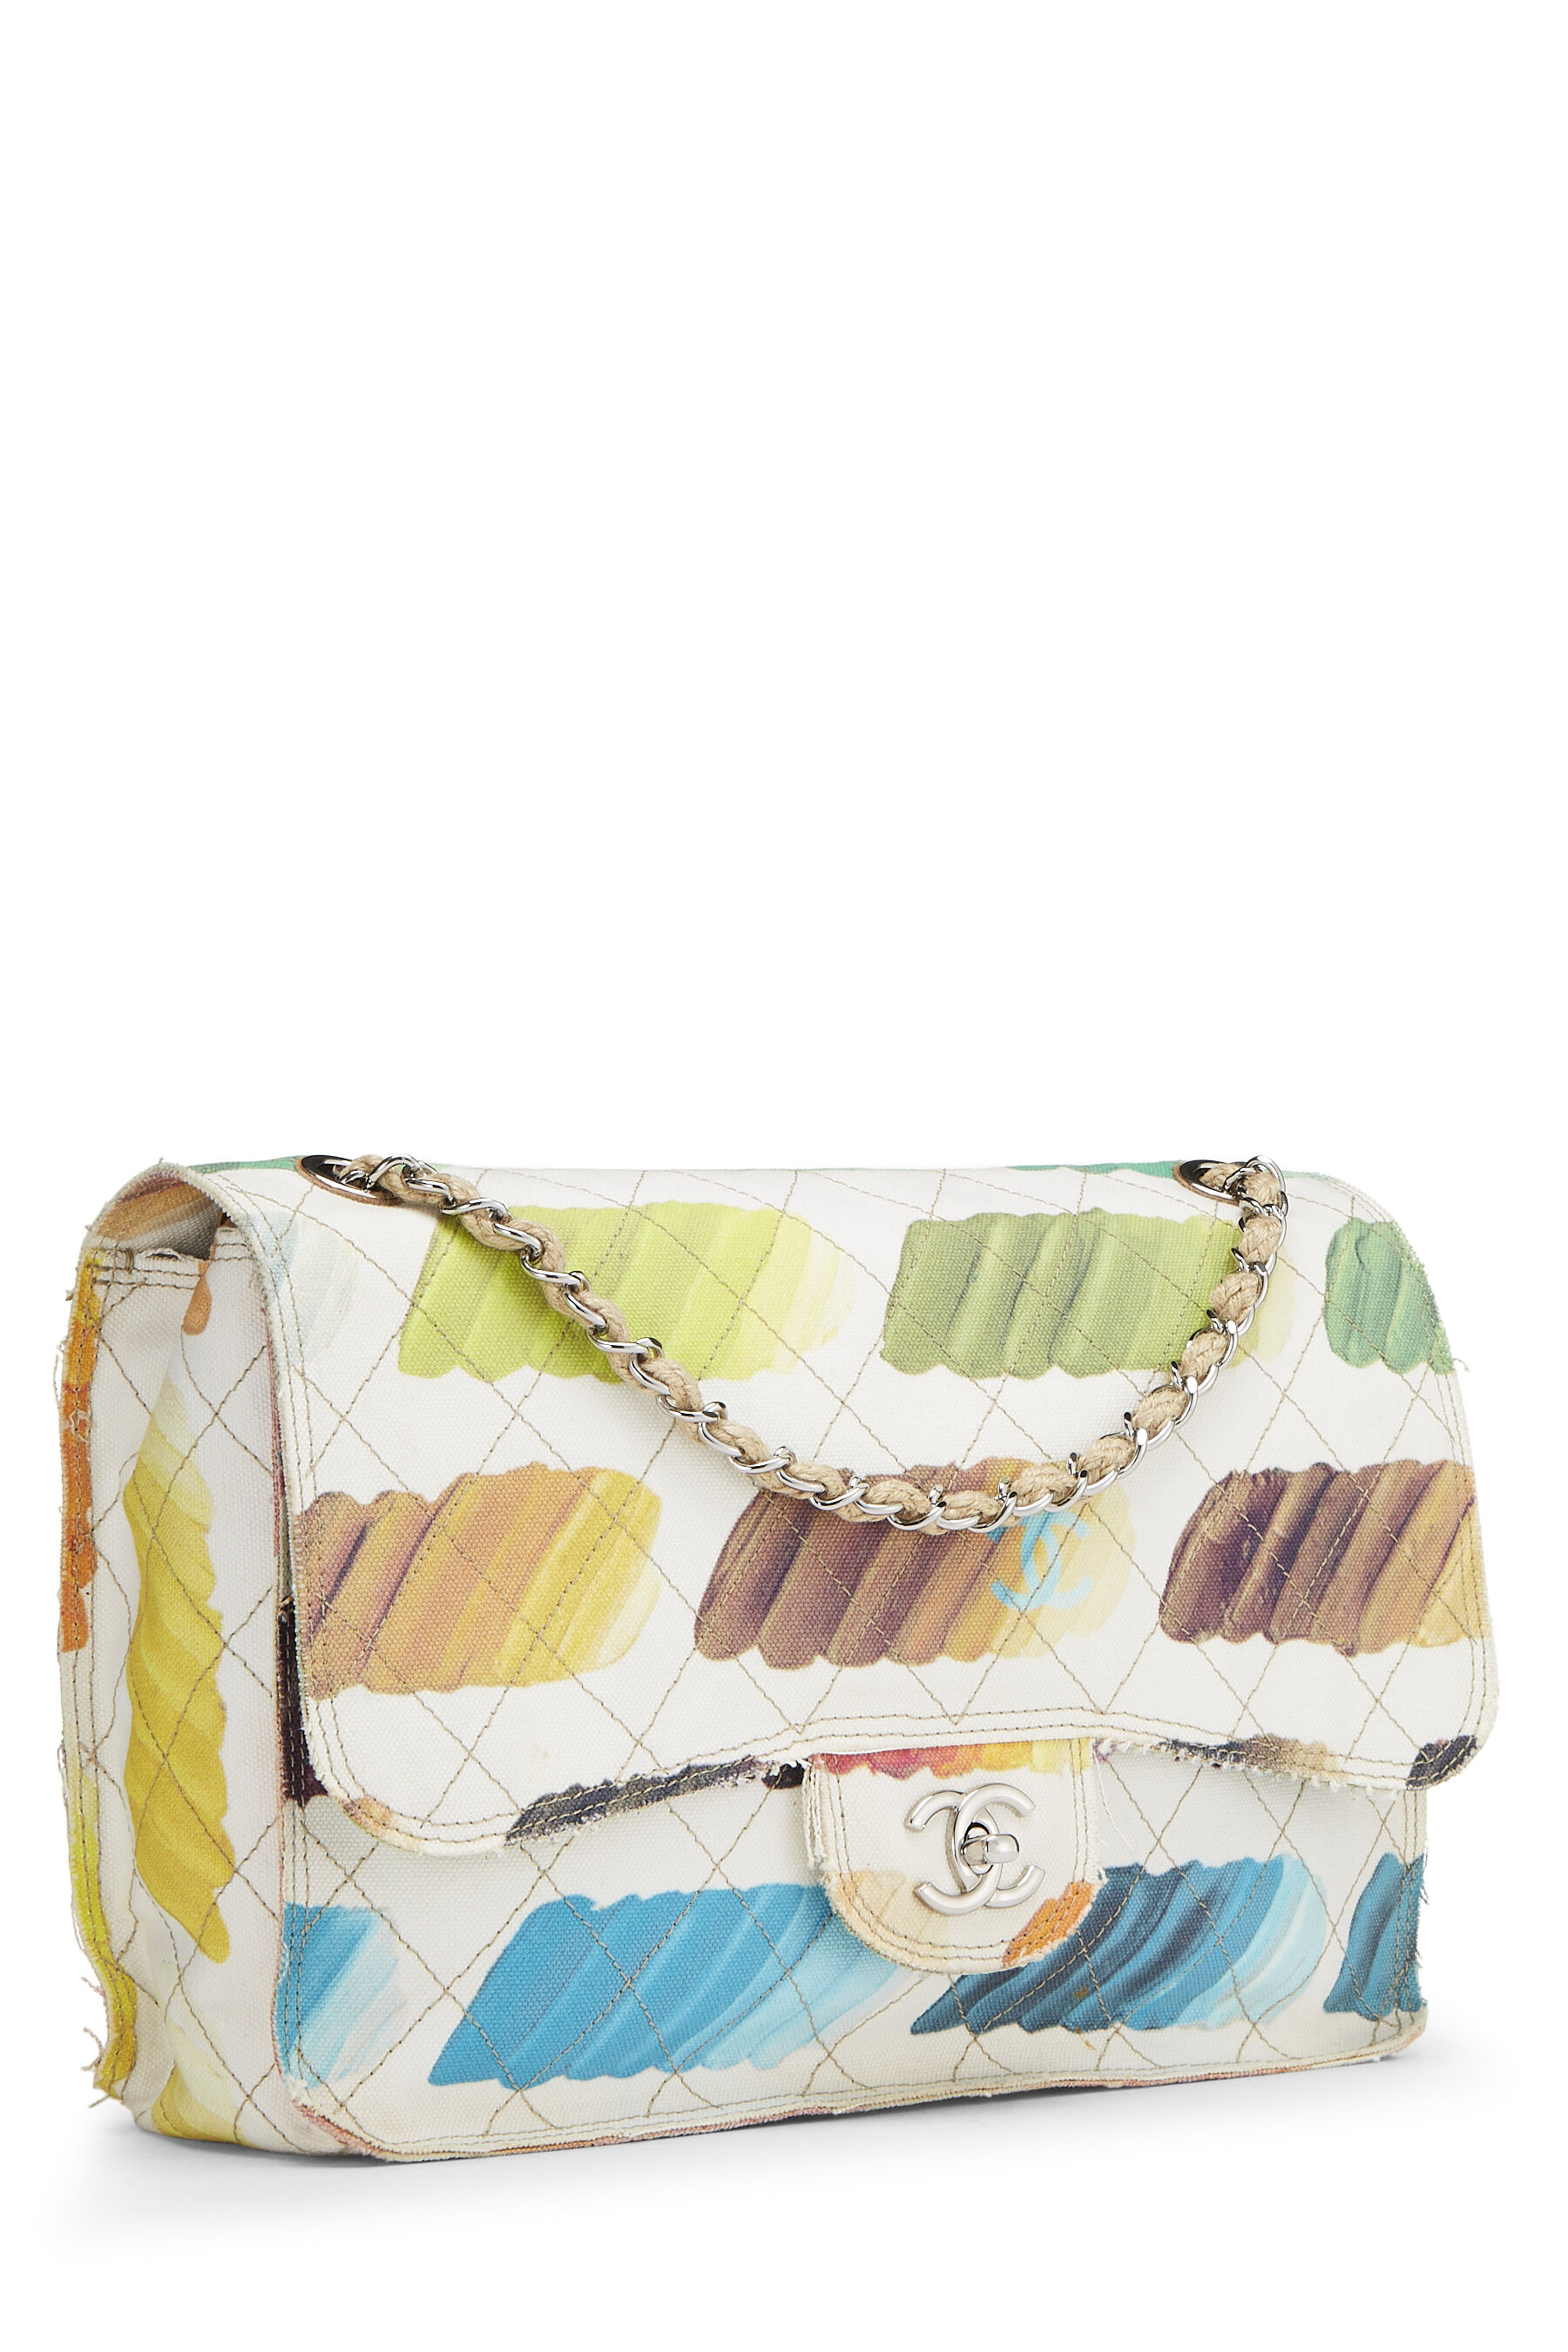 Chanel Multicolor Colorama Printed Canvas Flap Bag Jumbo Q6BJUW0EM4001